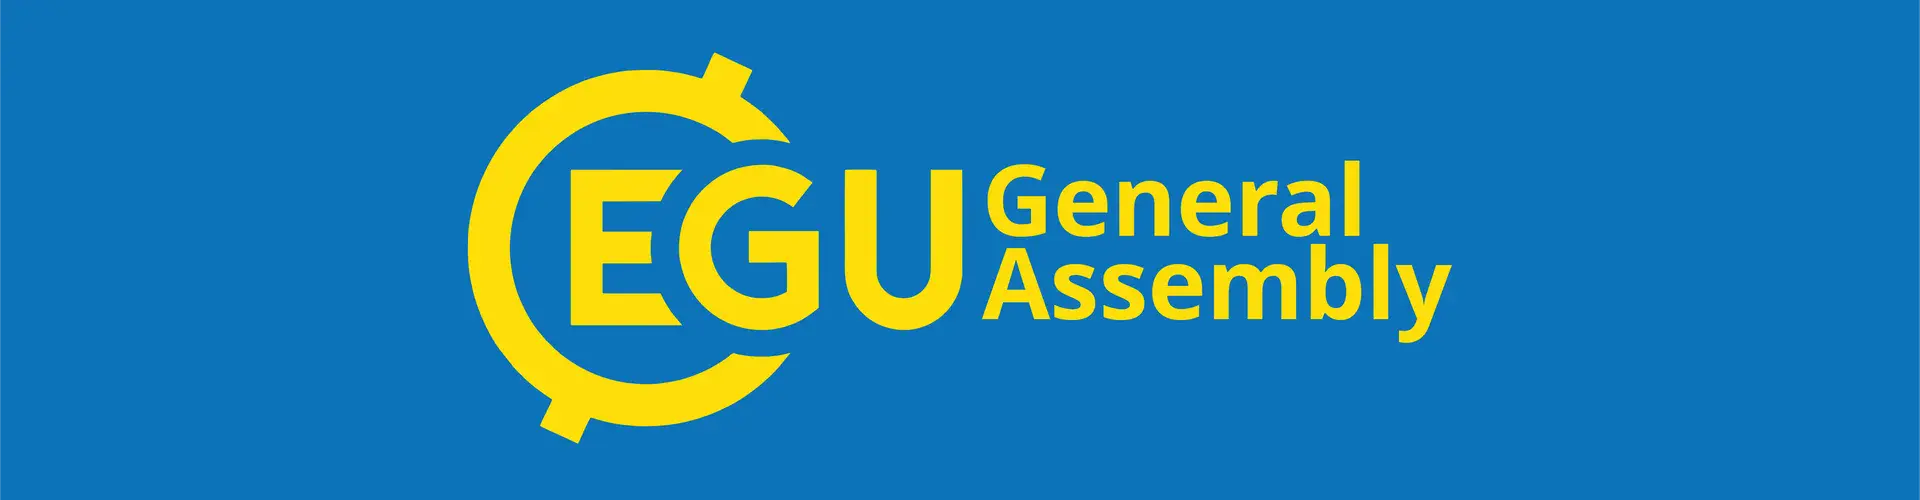 EGU General Assembly logo (no year).png